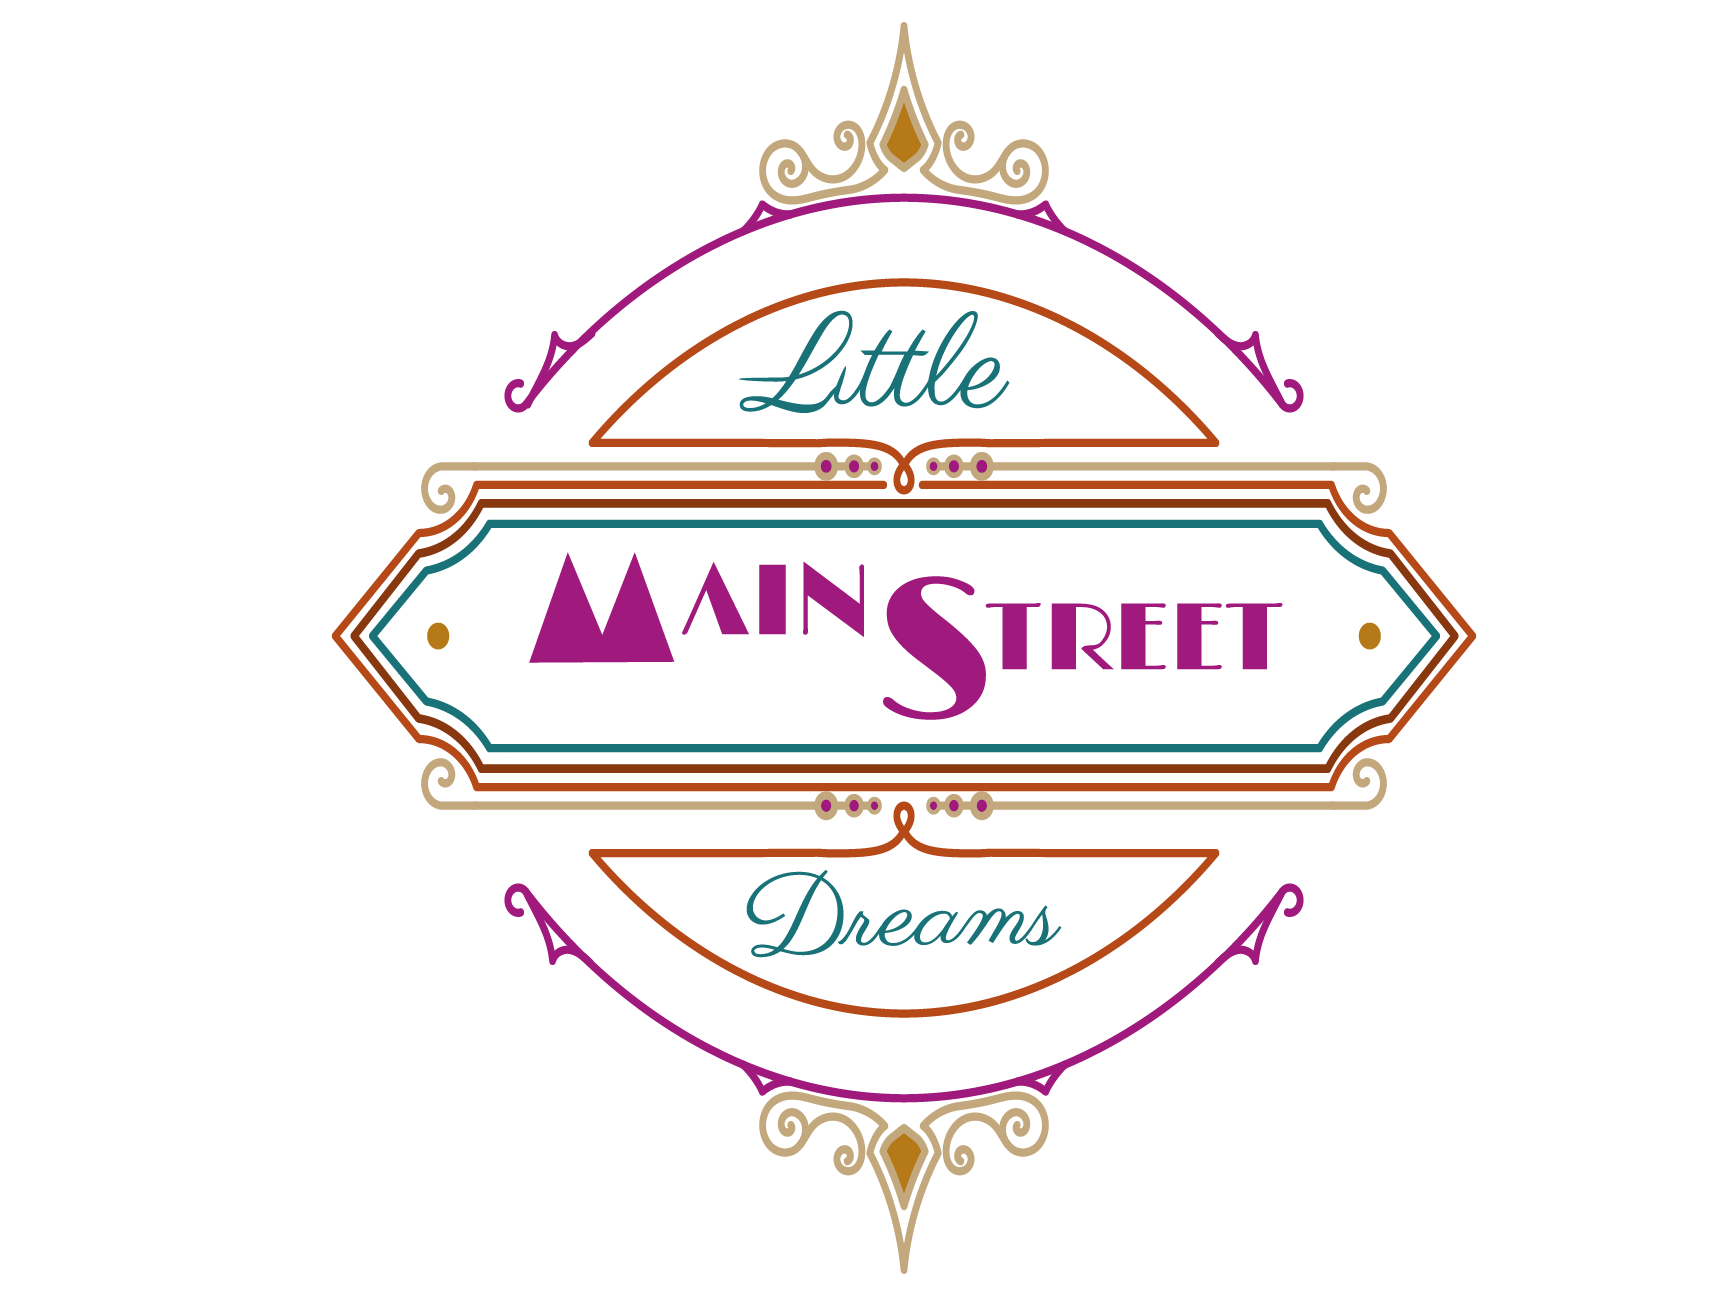 Little MainStreet Dreams Logo